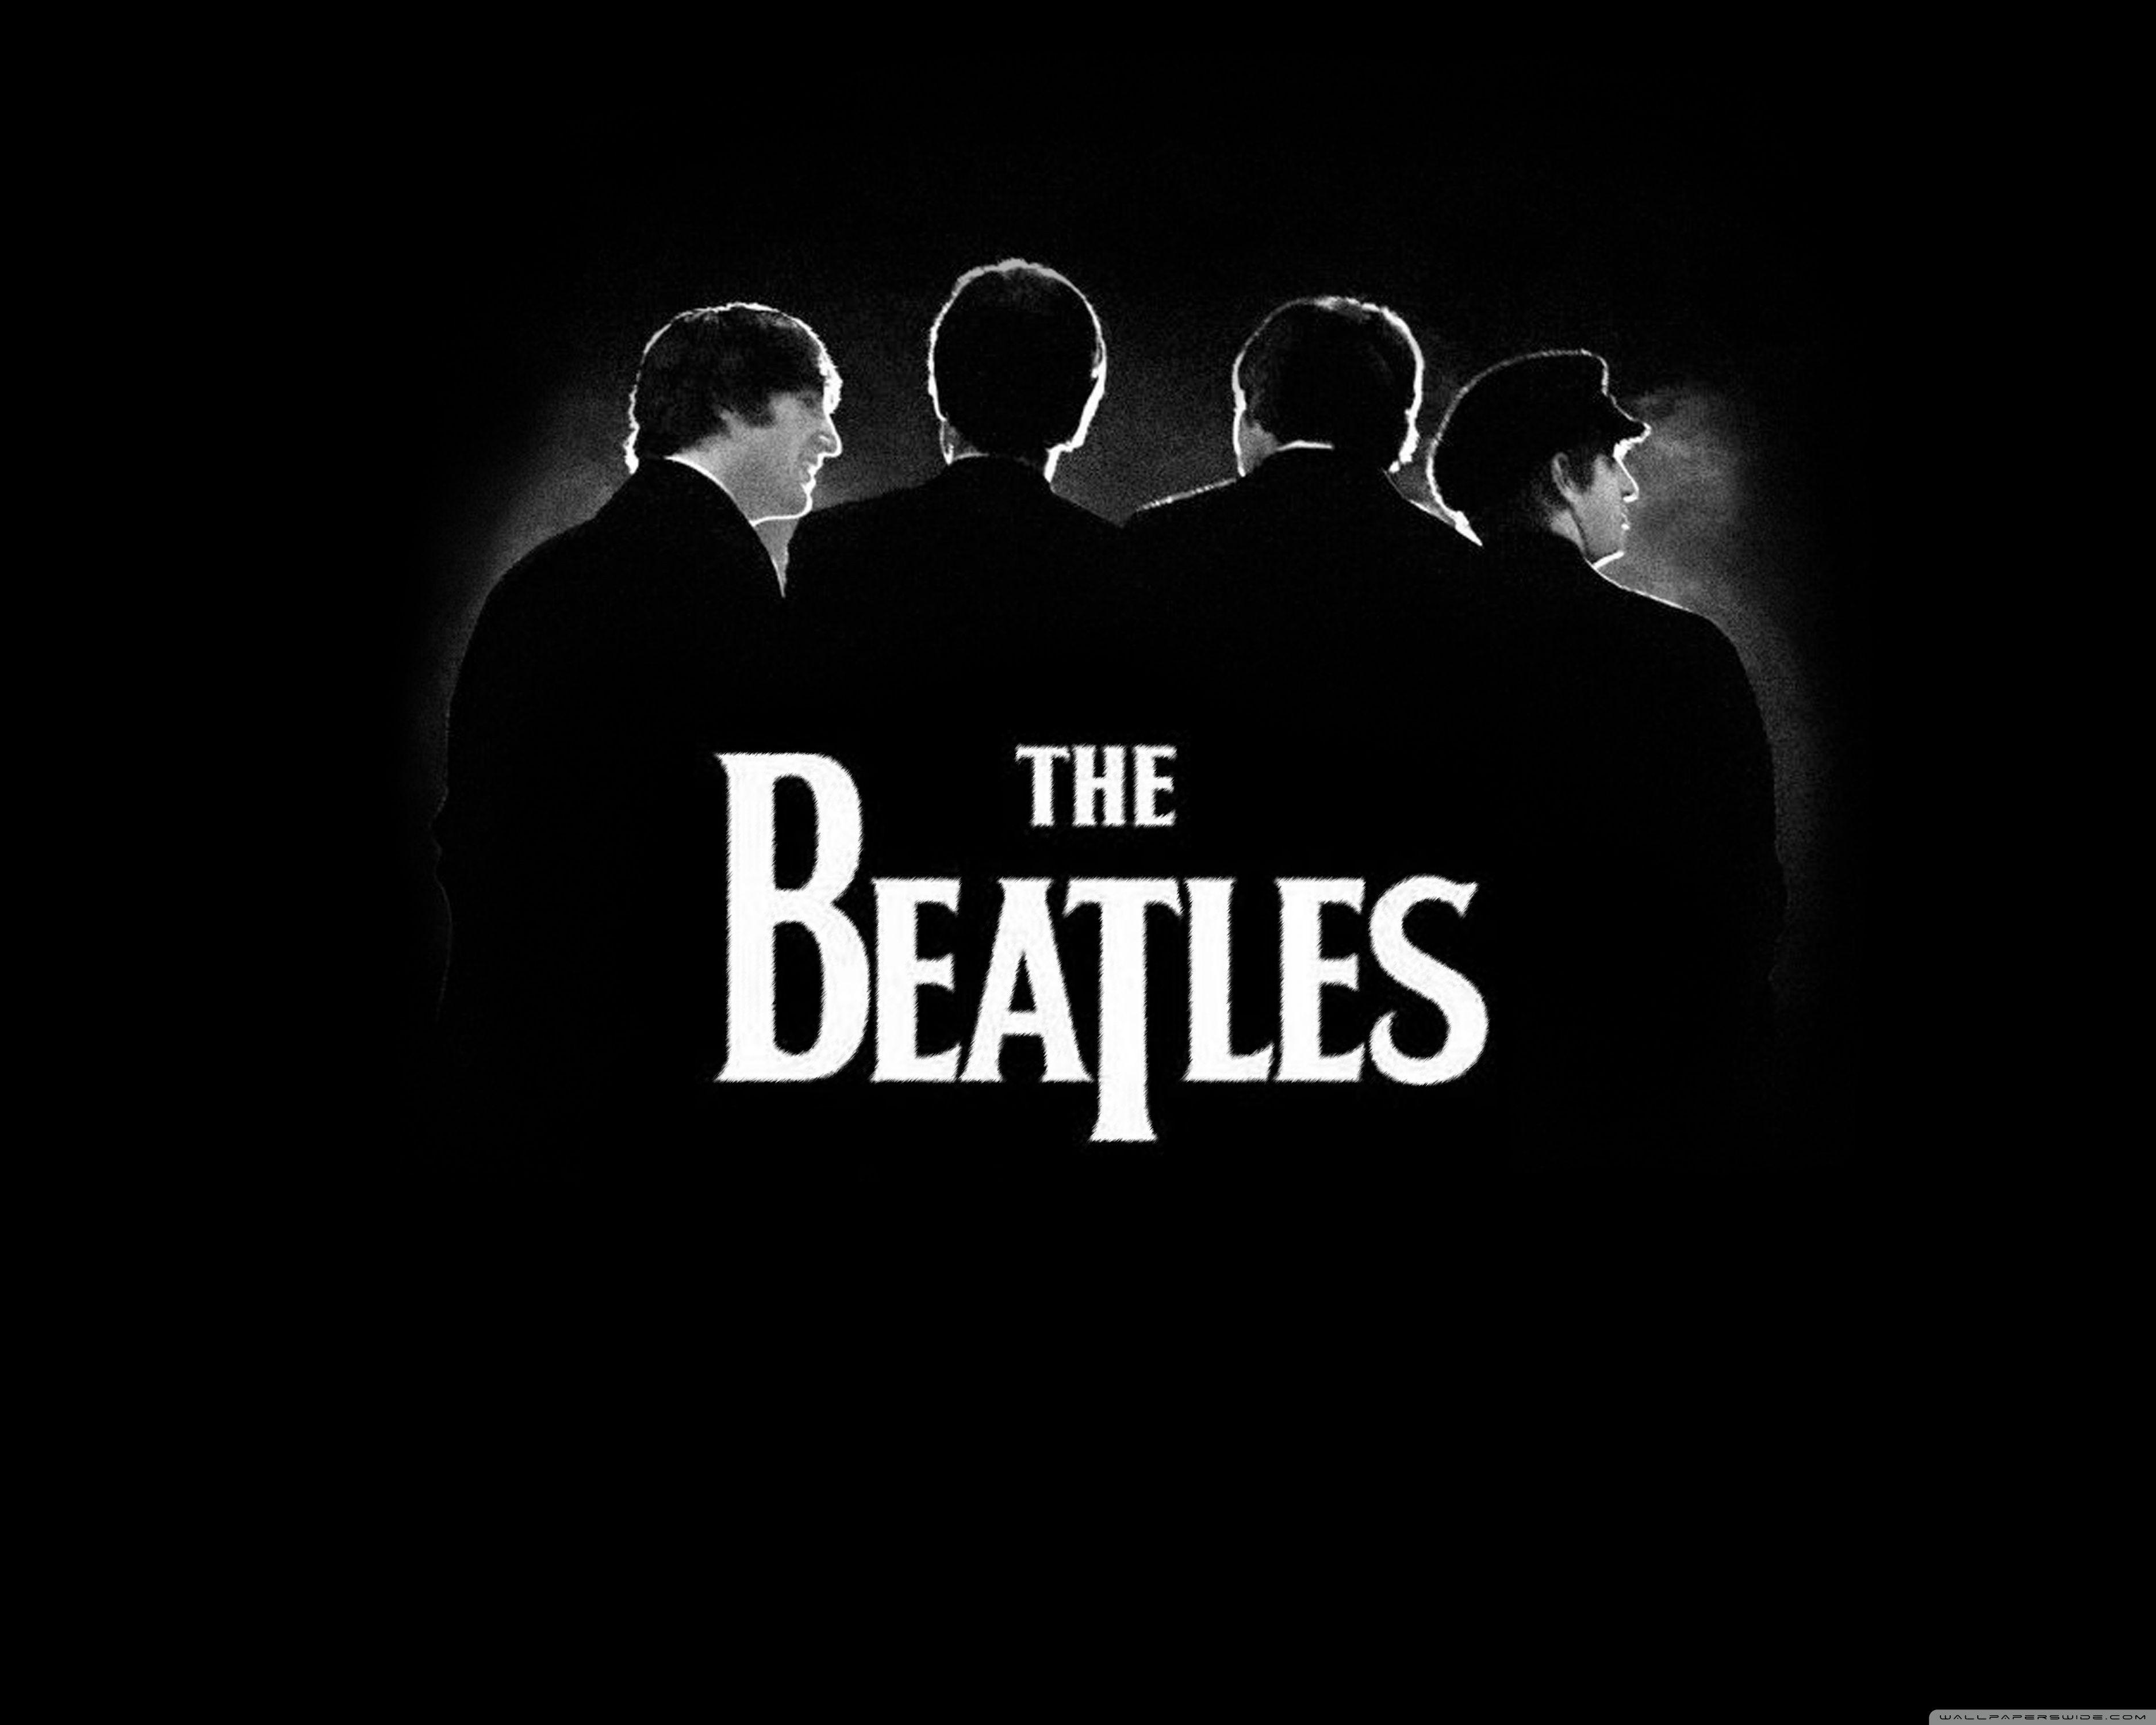 The Beatles Logo Wallpaper Free The Beatles Logo Background